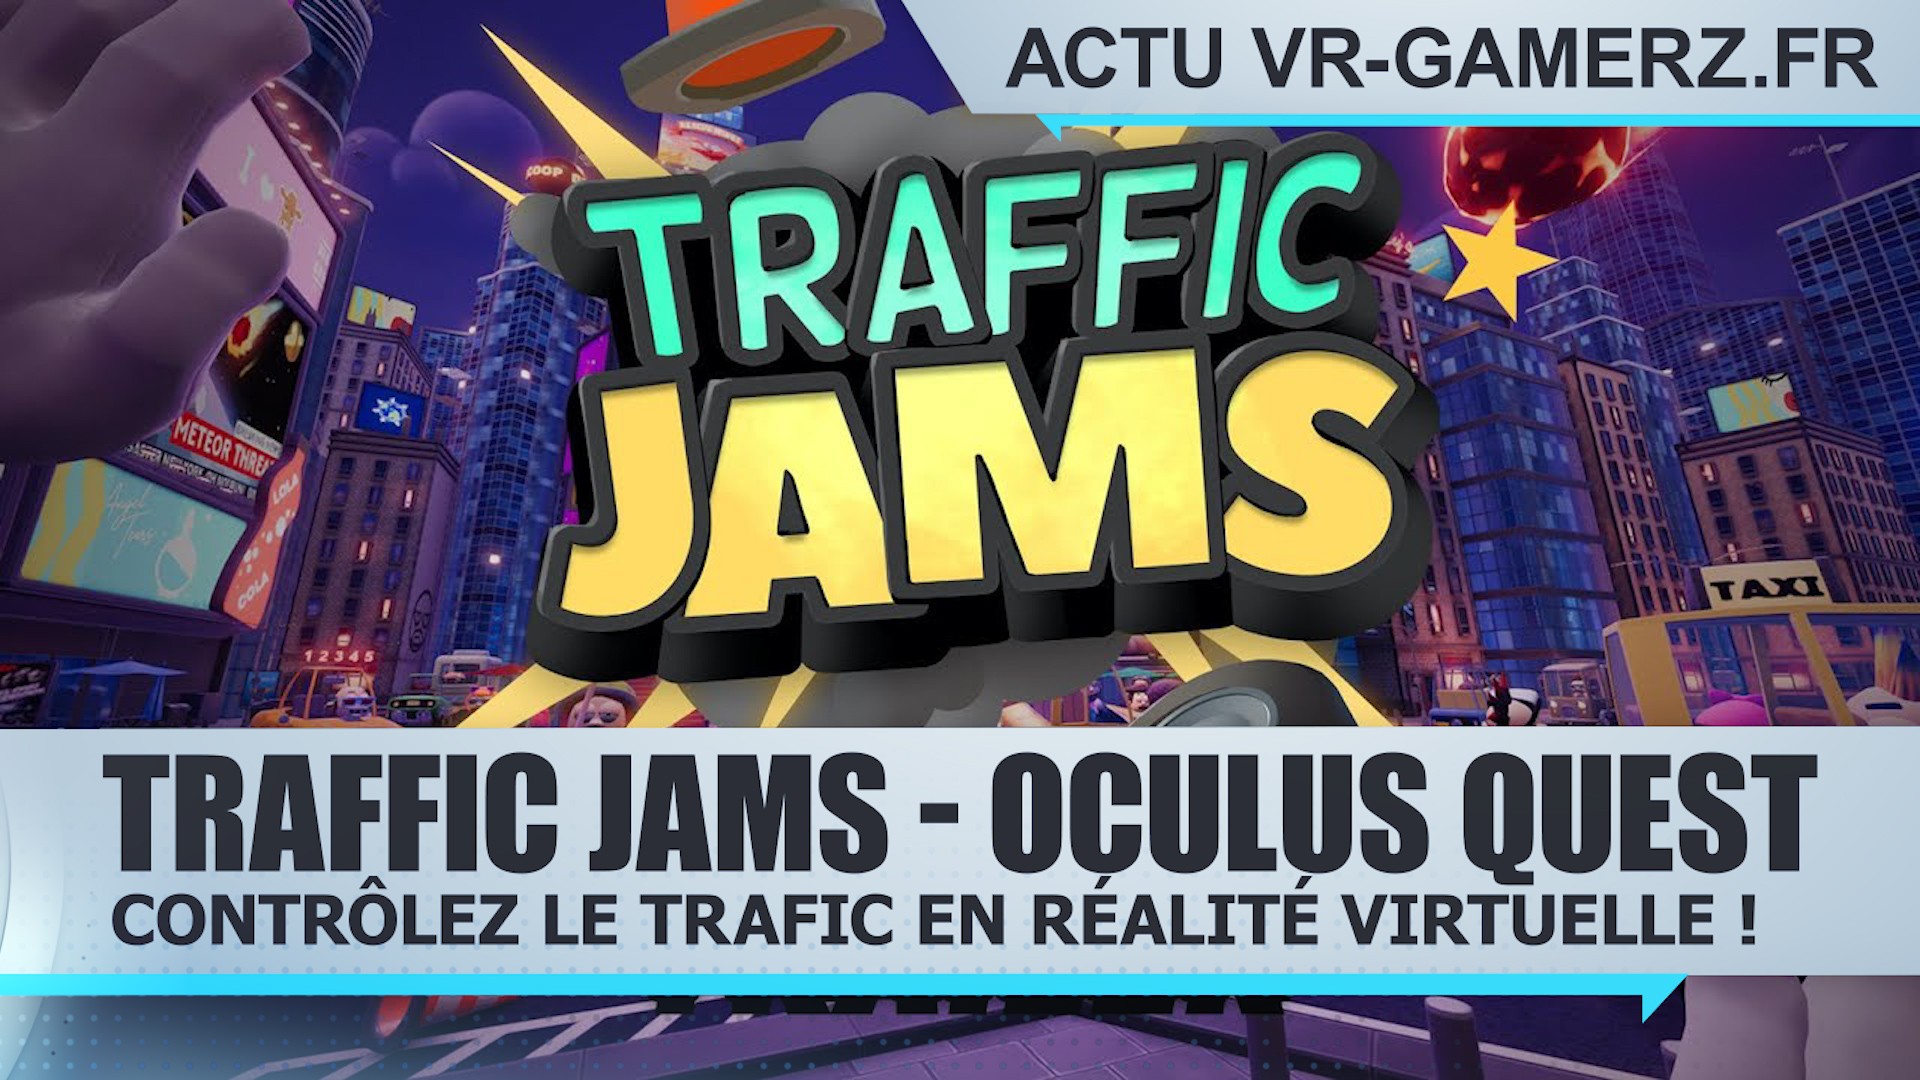 Traffic jams sortira le 8 Avril sur Oculus quest !